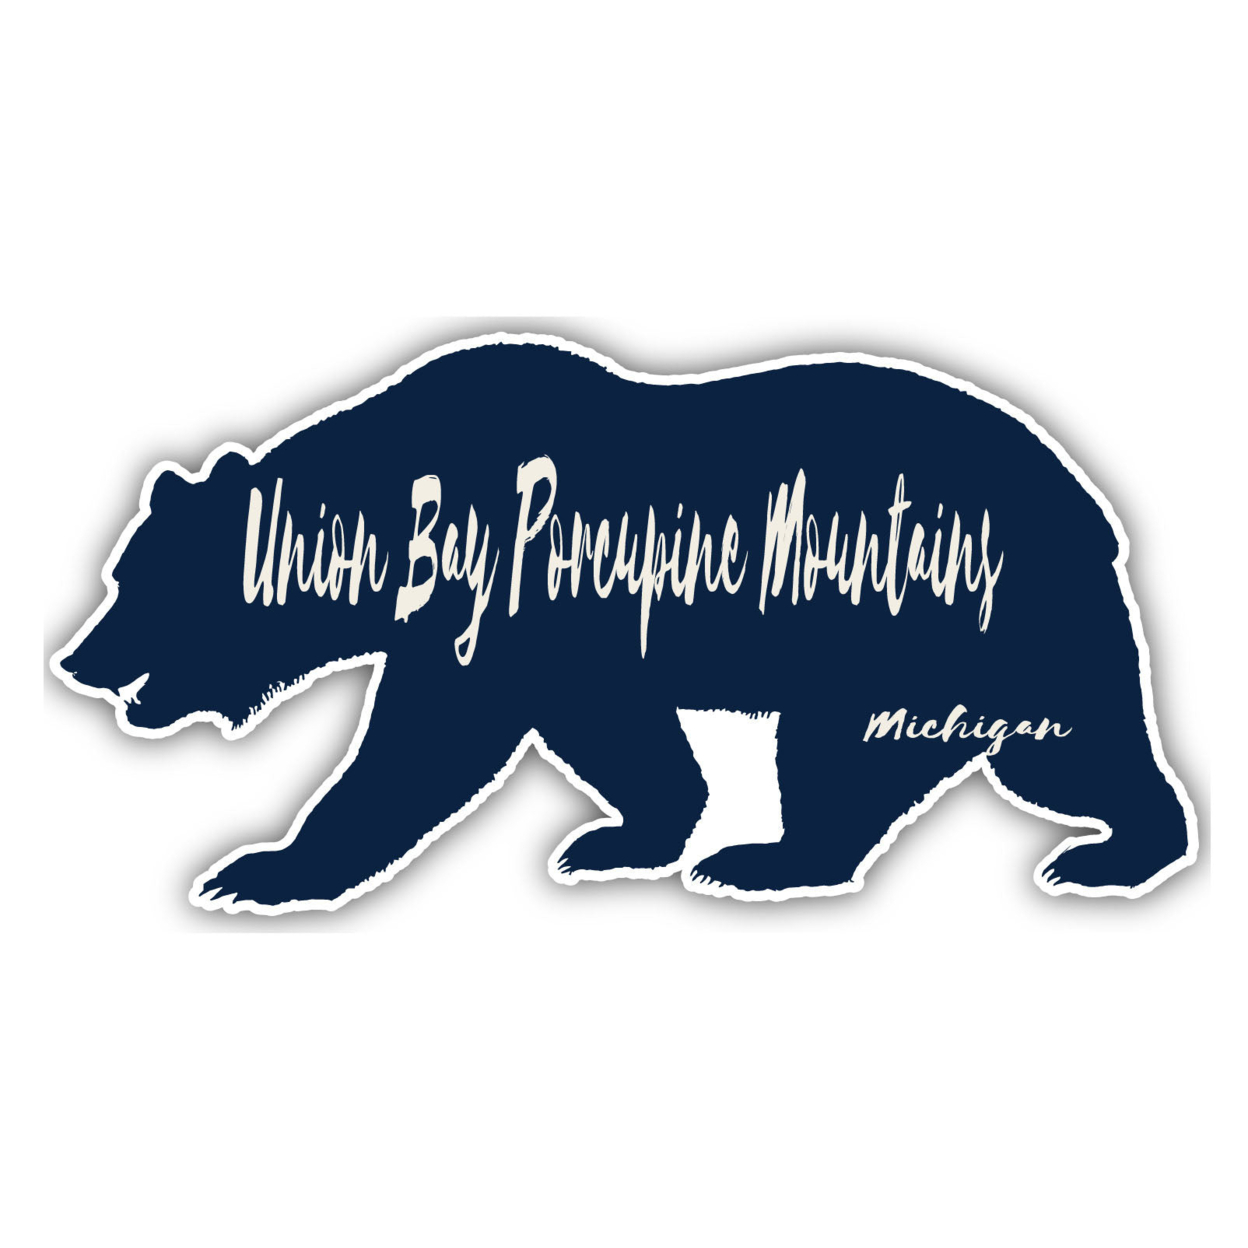 Union Bay Porcupine Mountains Michigan Souvenir Decorative Stickers (Choose Theme And Size) - Single Unit, 2-Inch, Bear